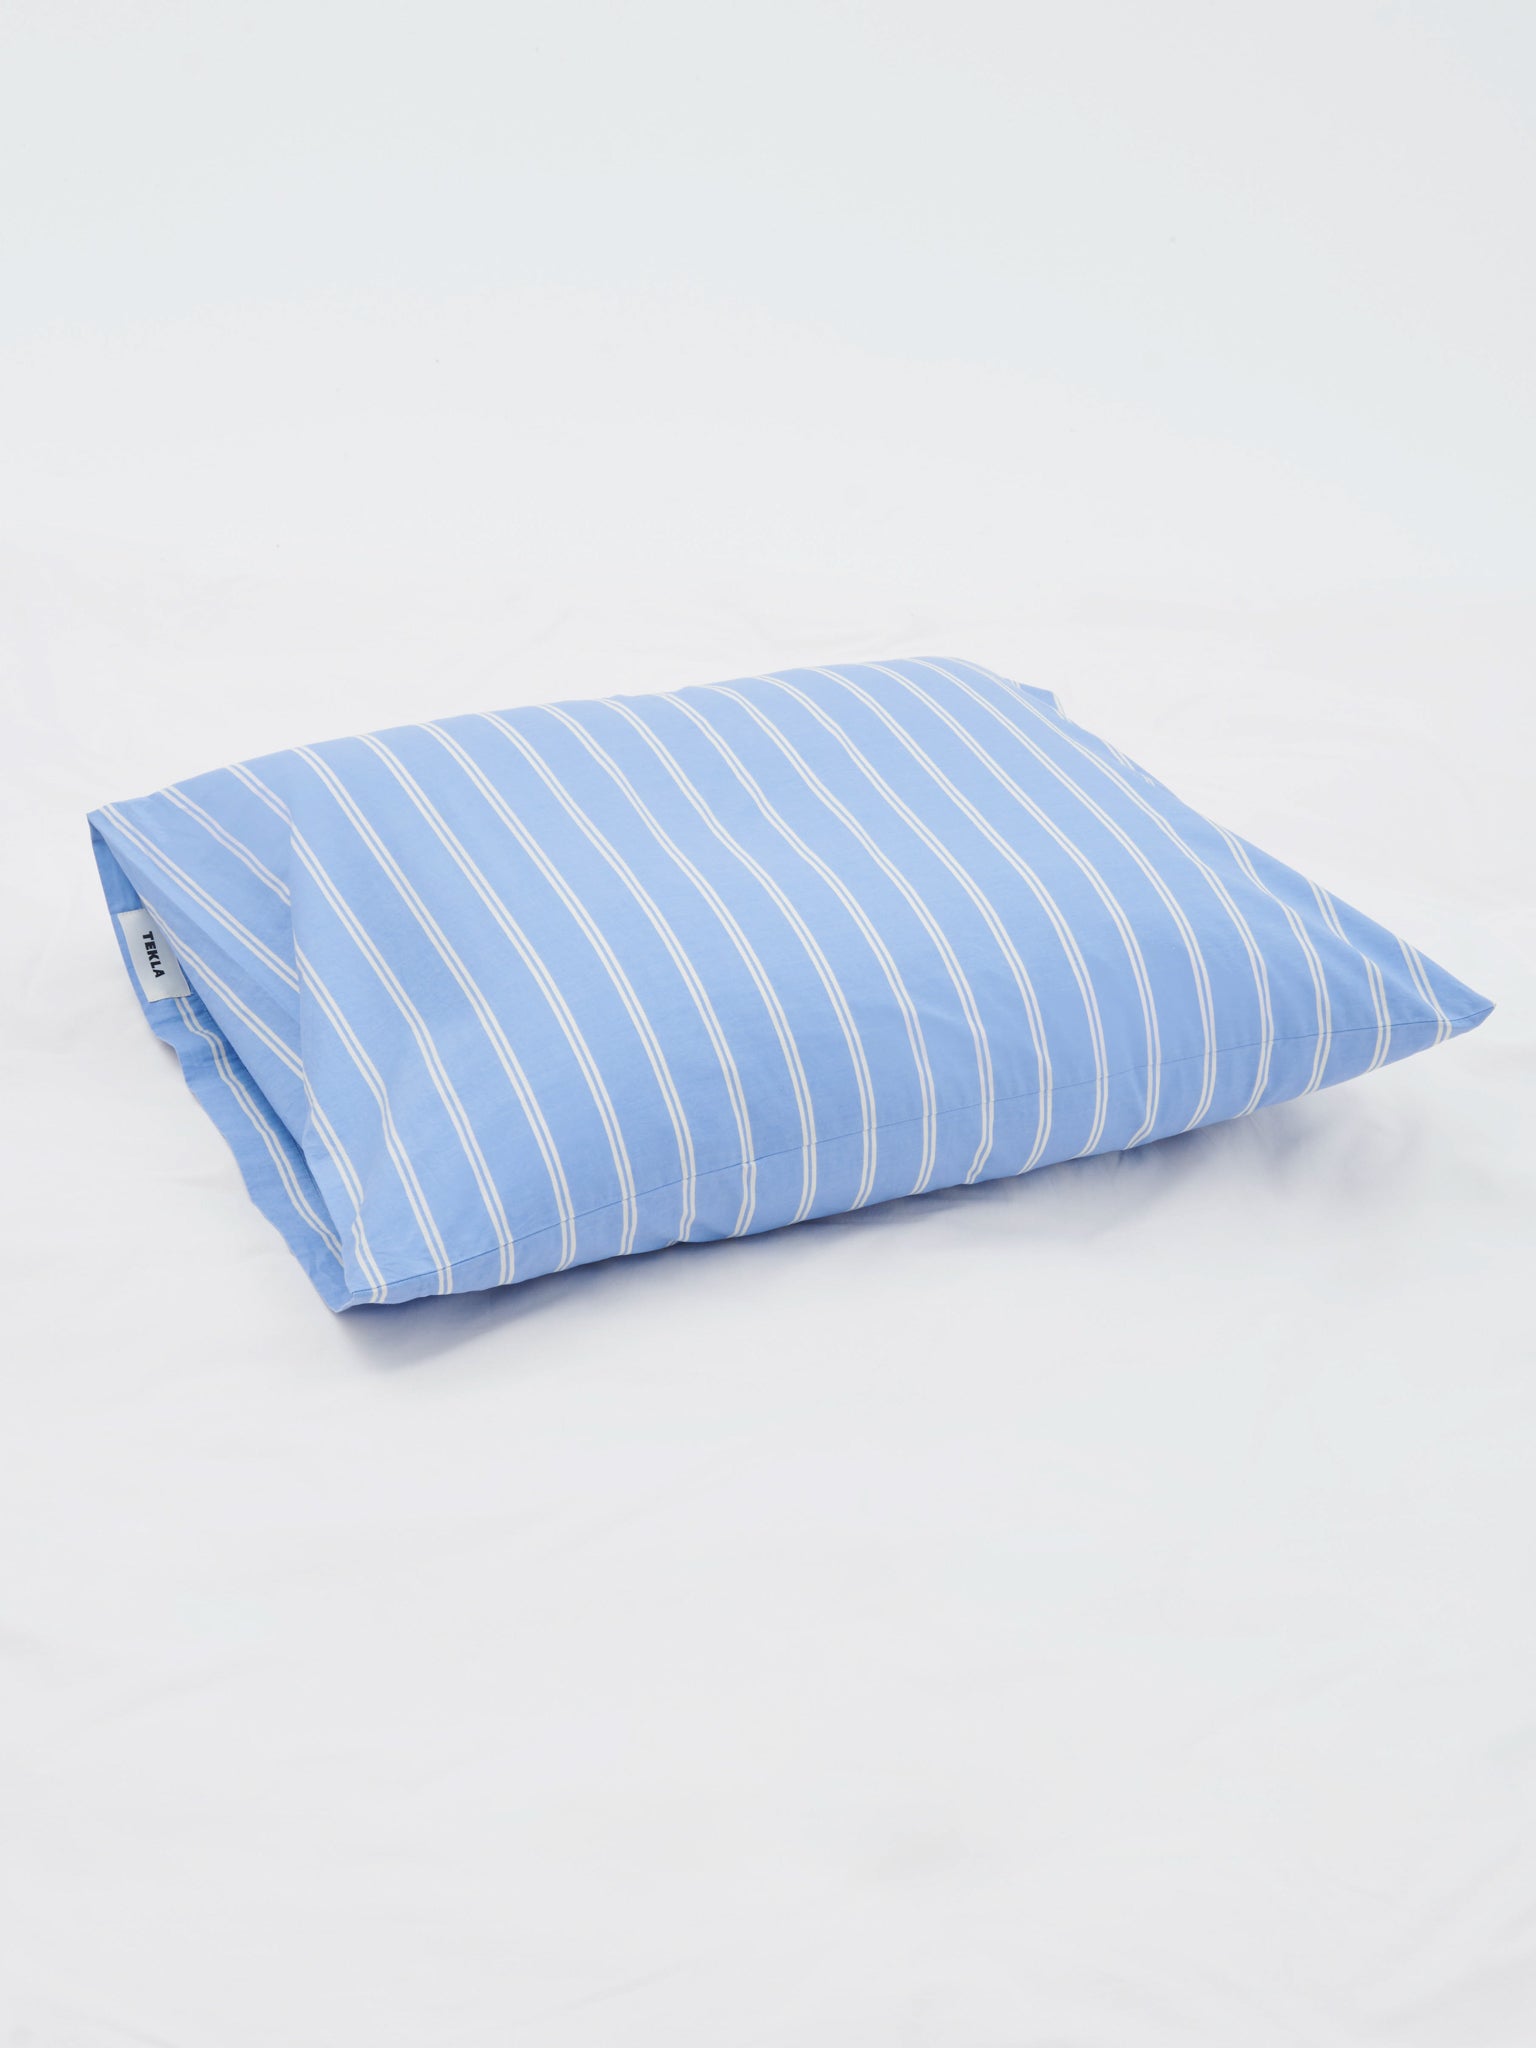 Tekla - Percale Pillow Sham in Island Blue Stripes